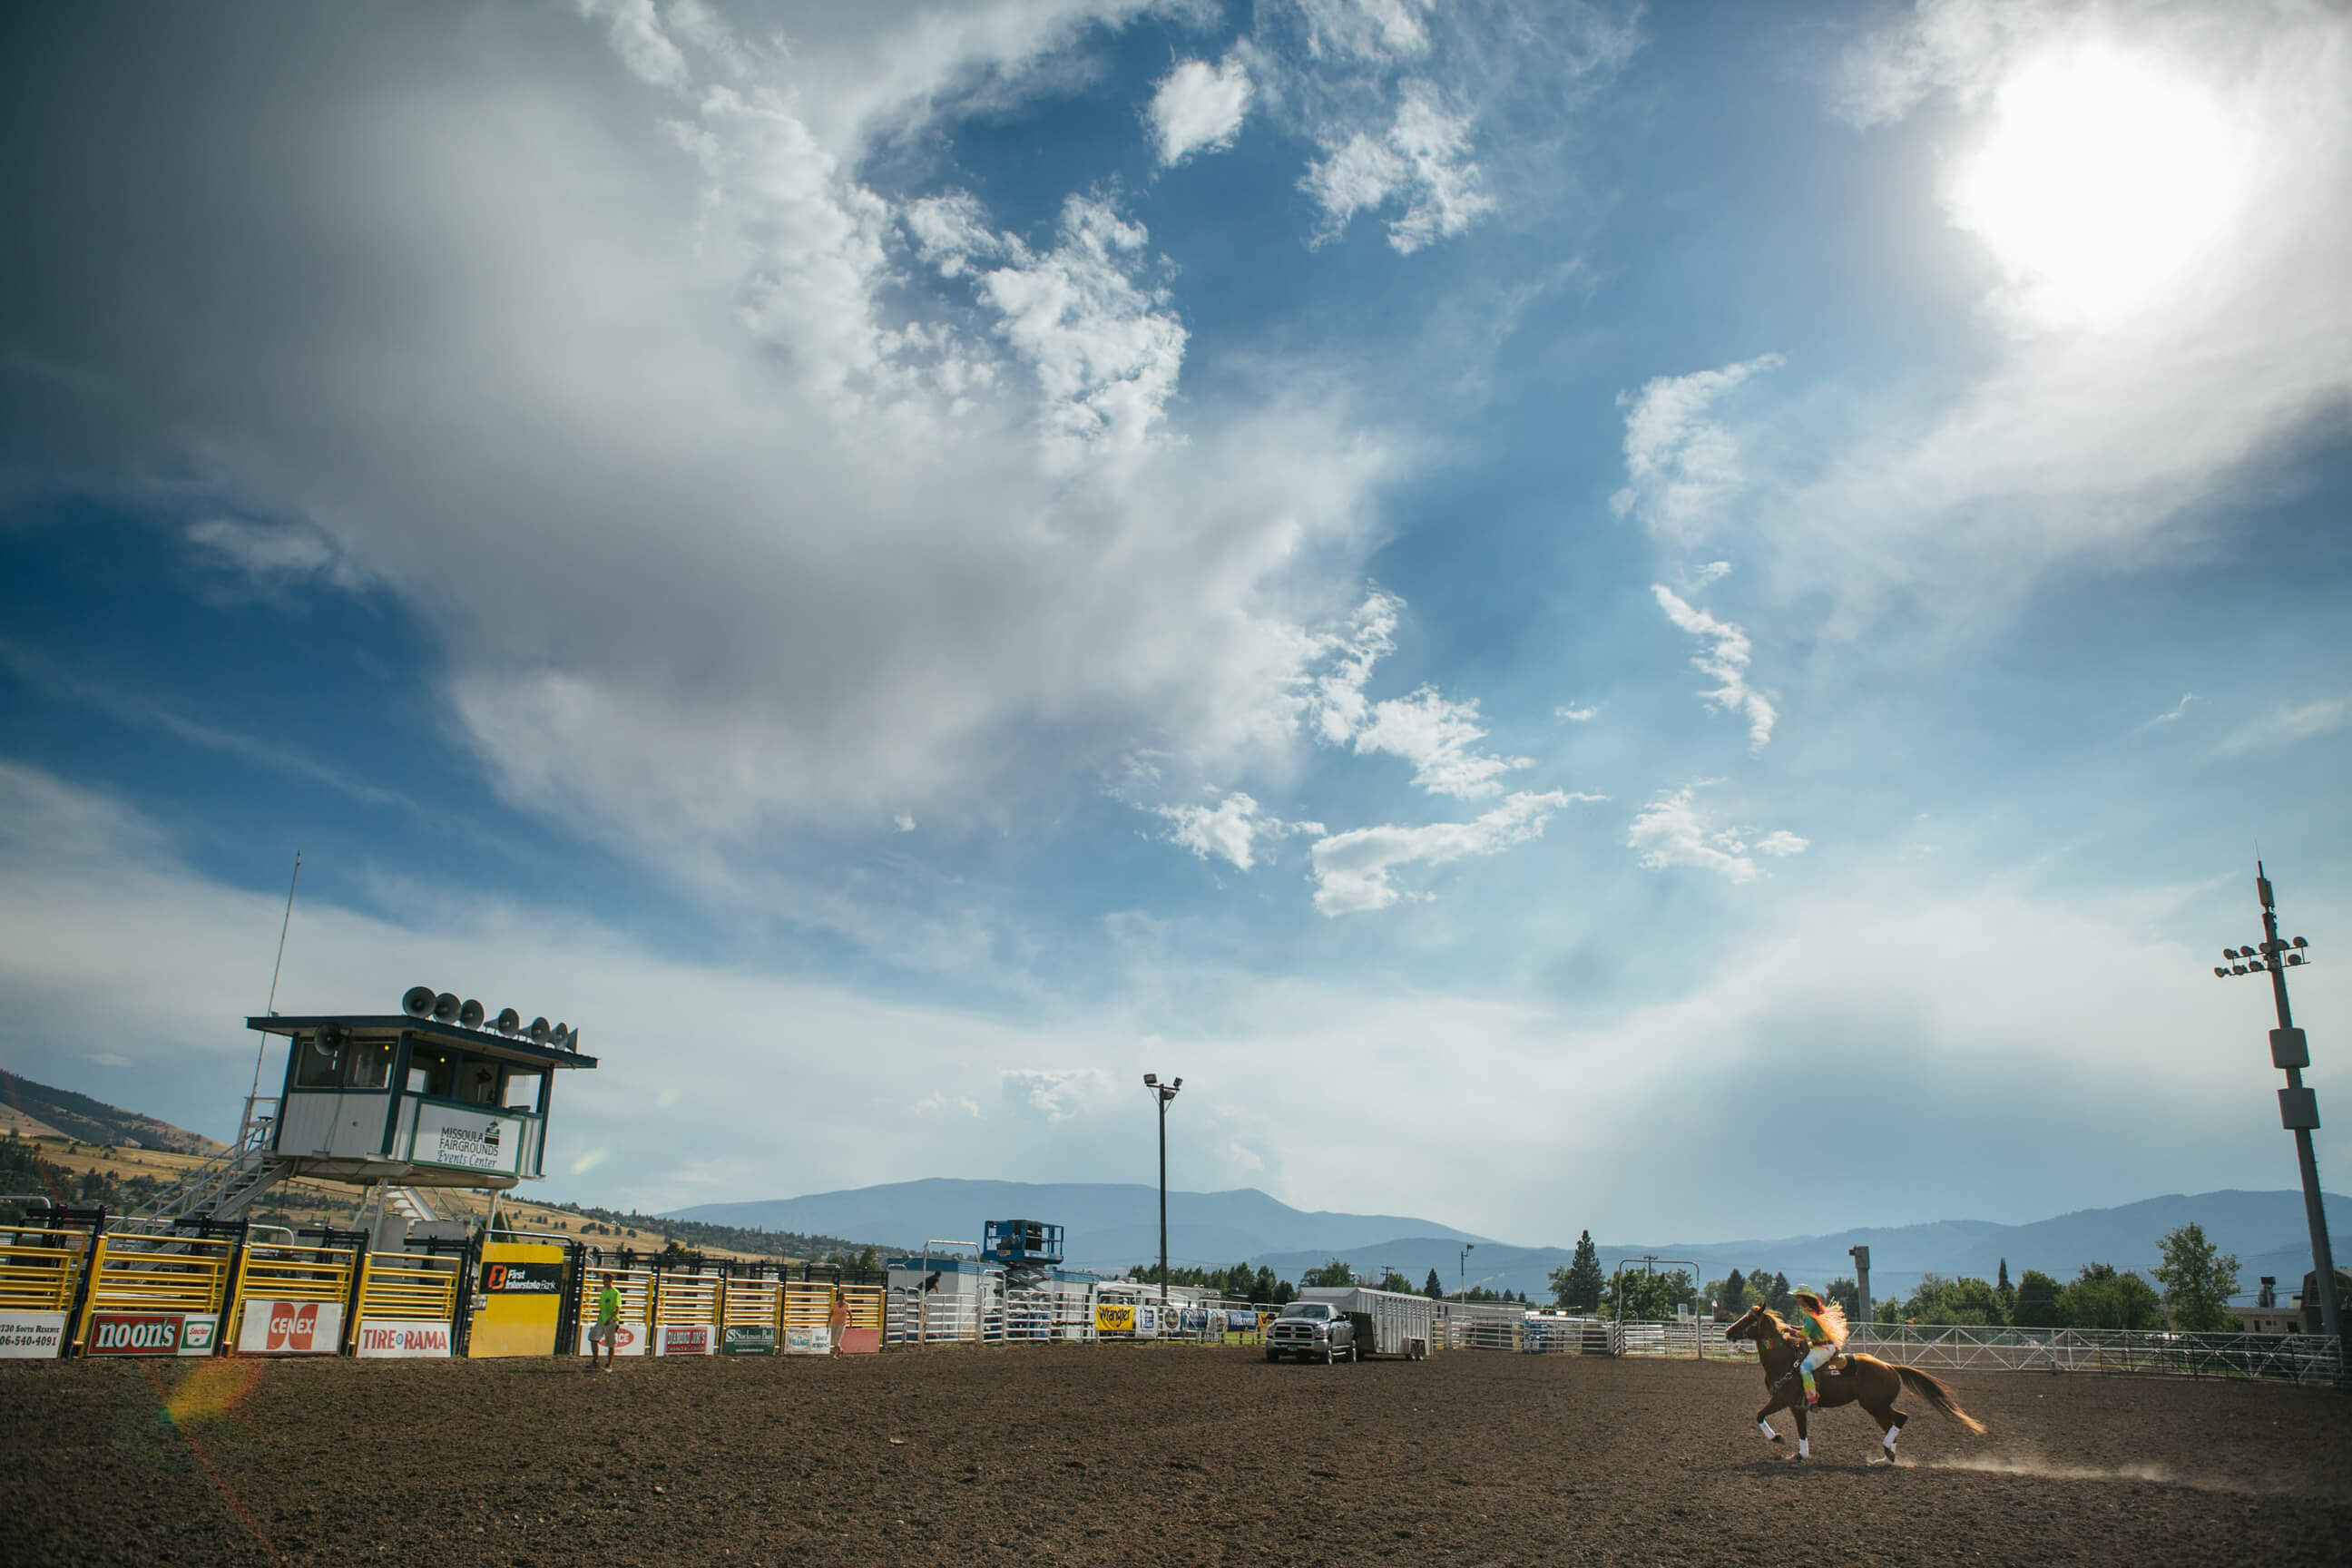 Fallon Taylor rides her horse across a barrel racing arena in Missoula Montana